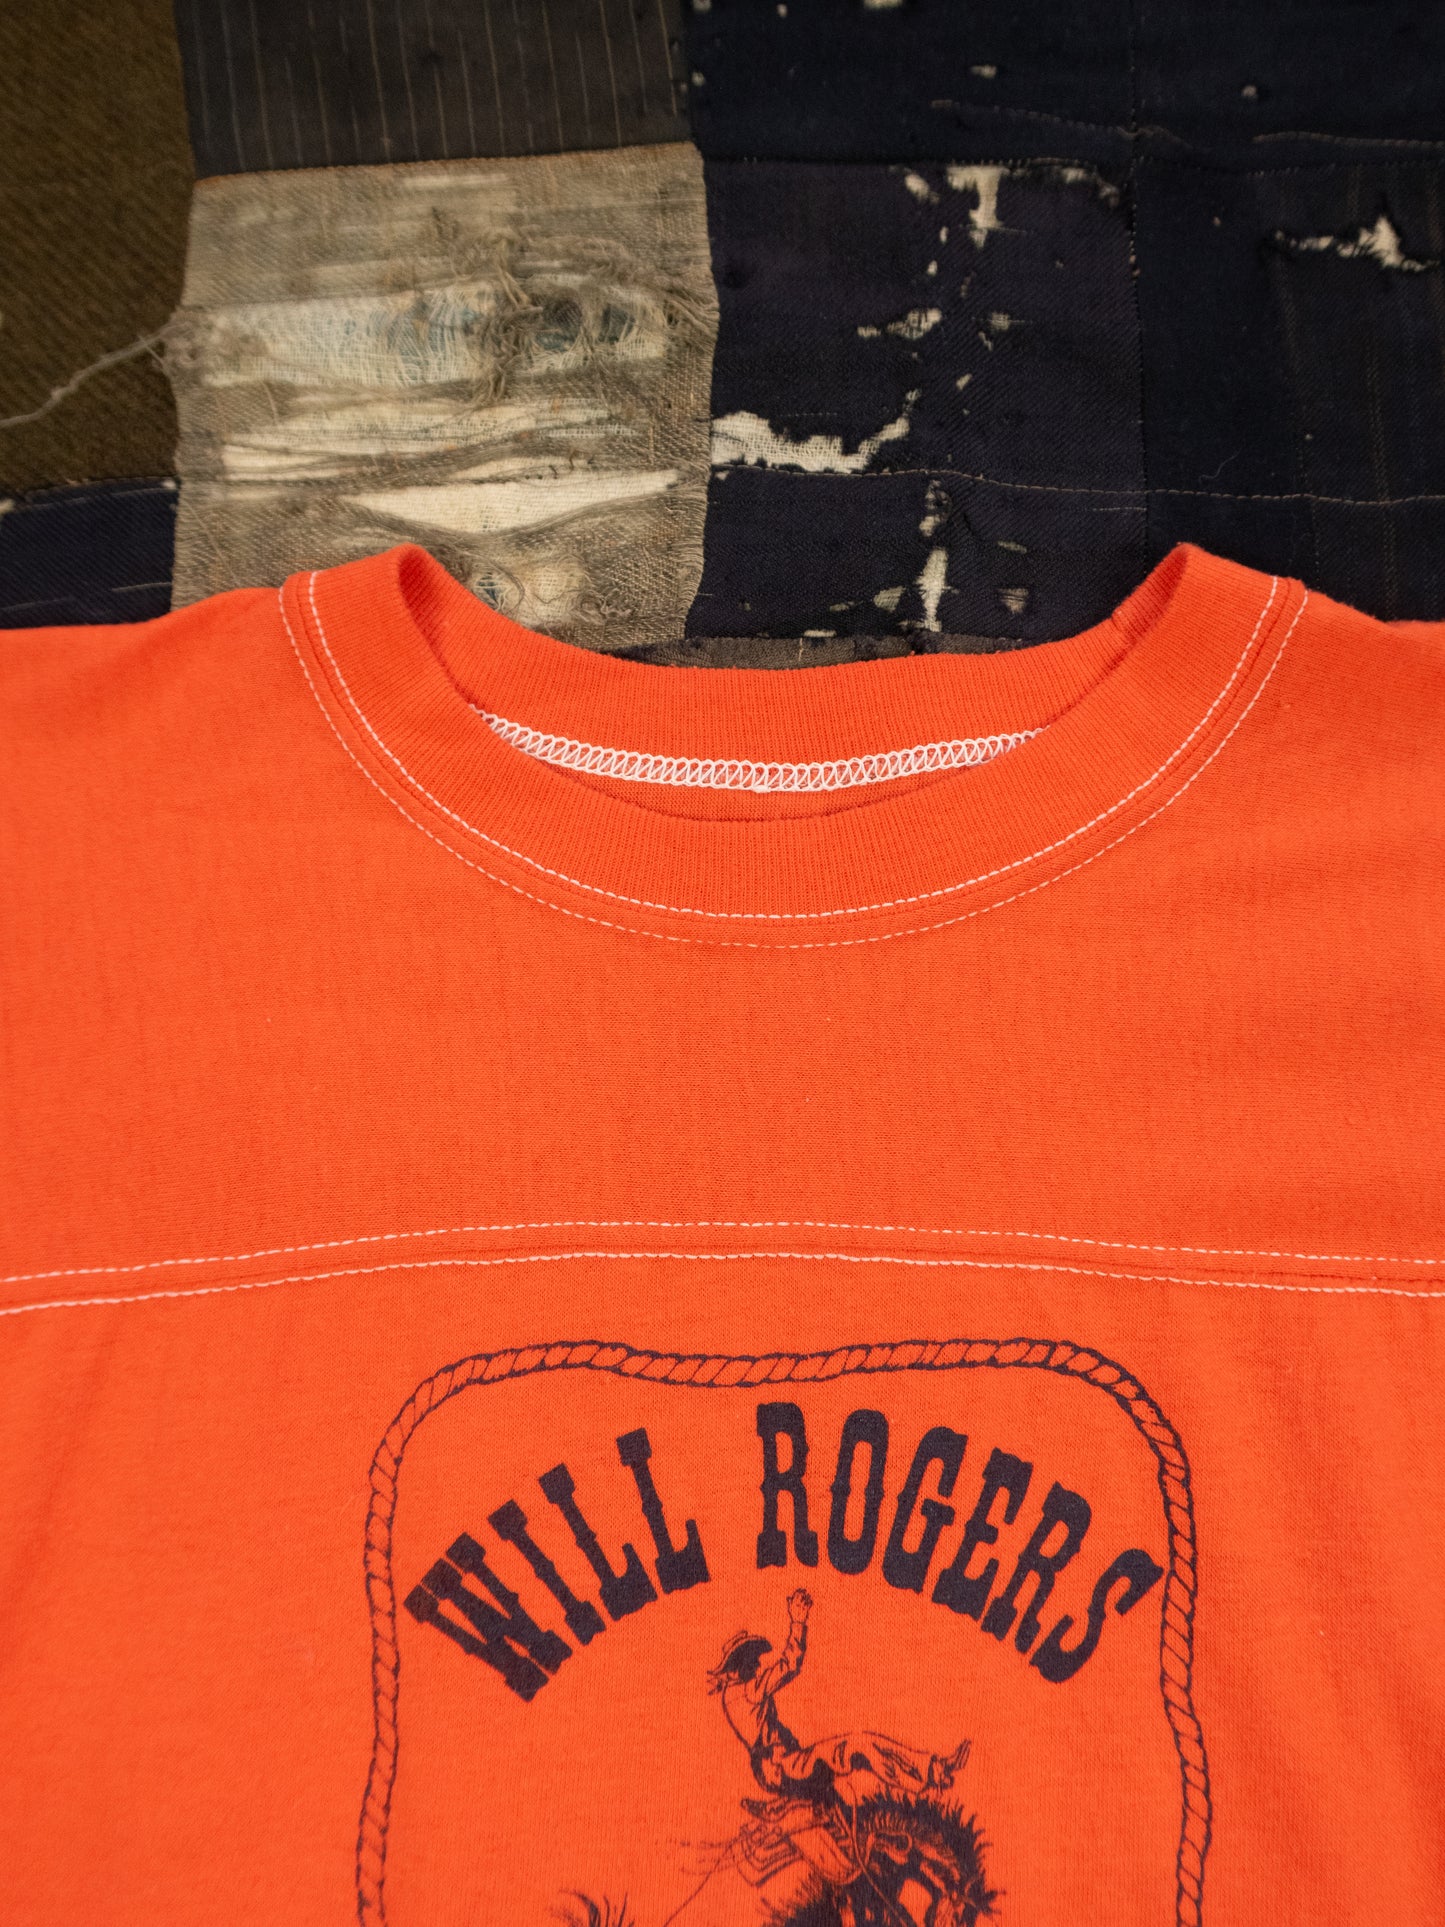 1970s Will Rogers Wranglers School T-Shirt Size L